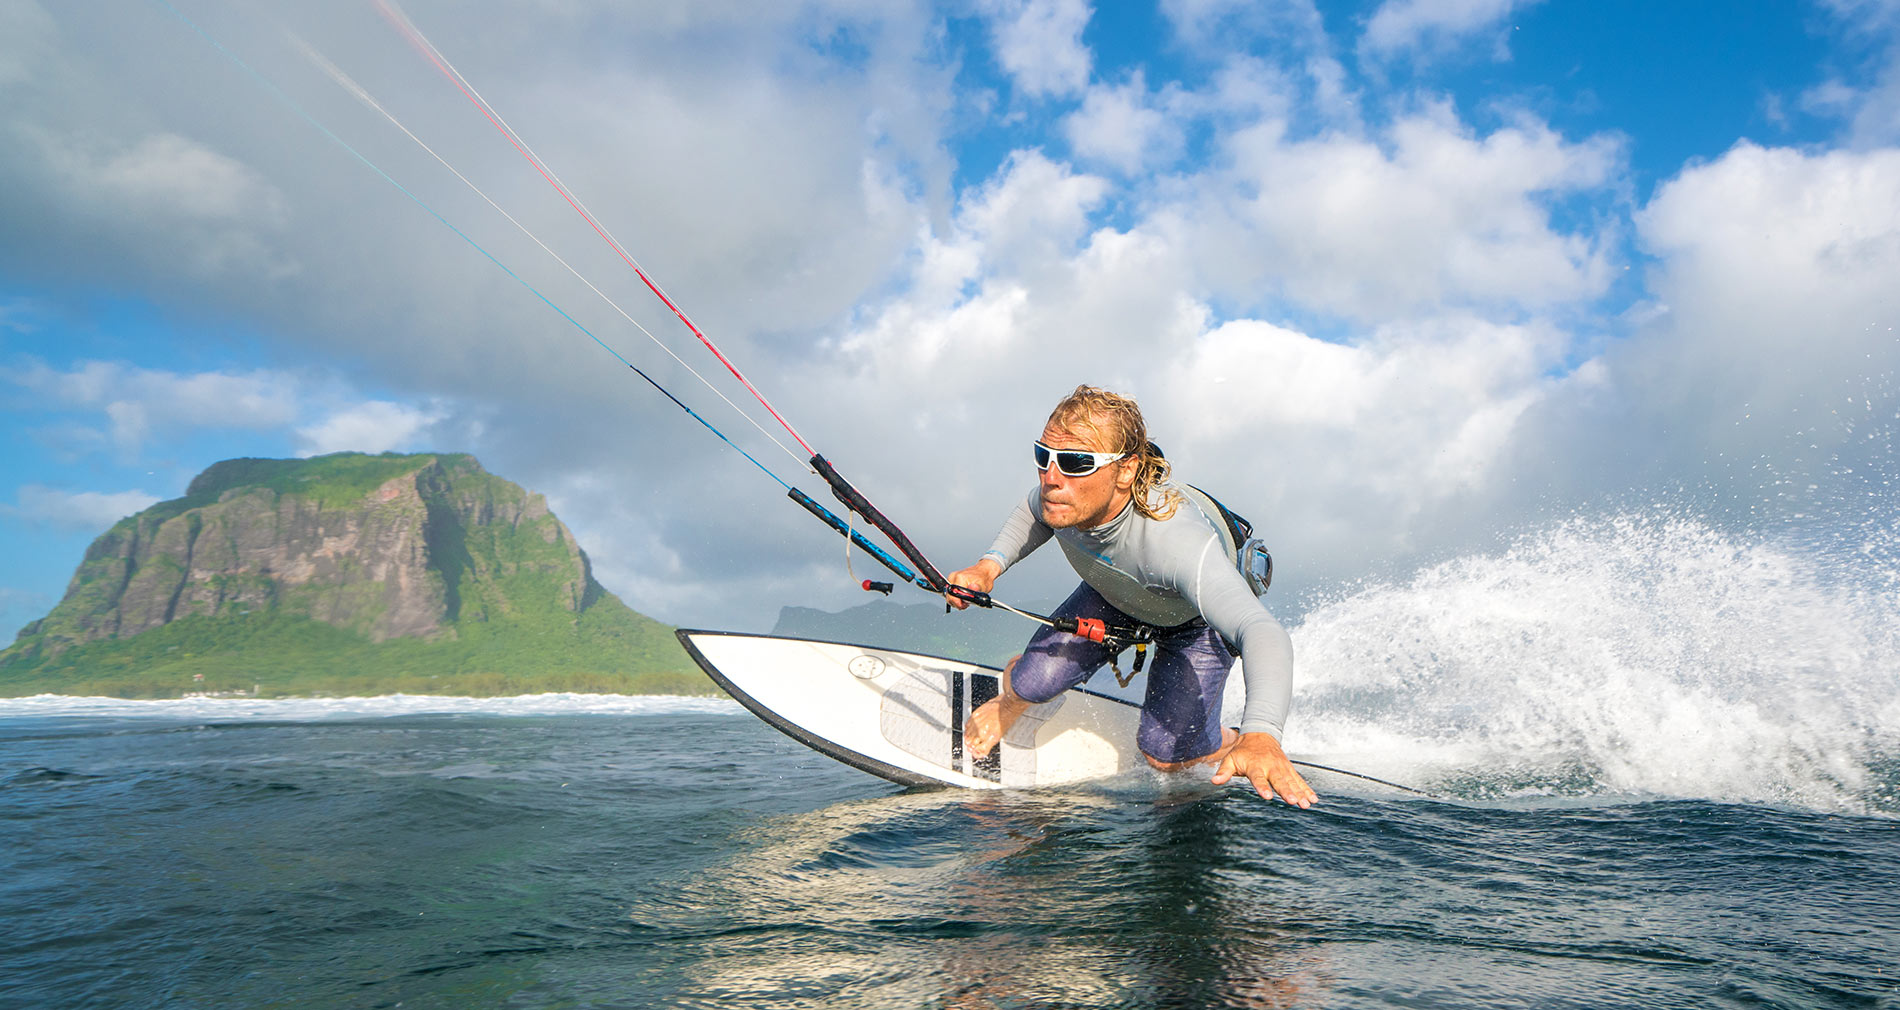 LiP Watersports Sunglasses: Kitesurf, Windsurf, Sailing, and more